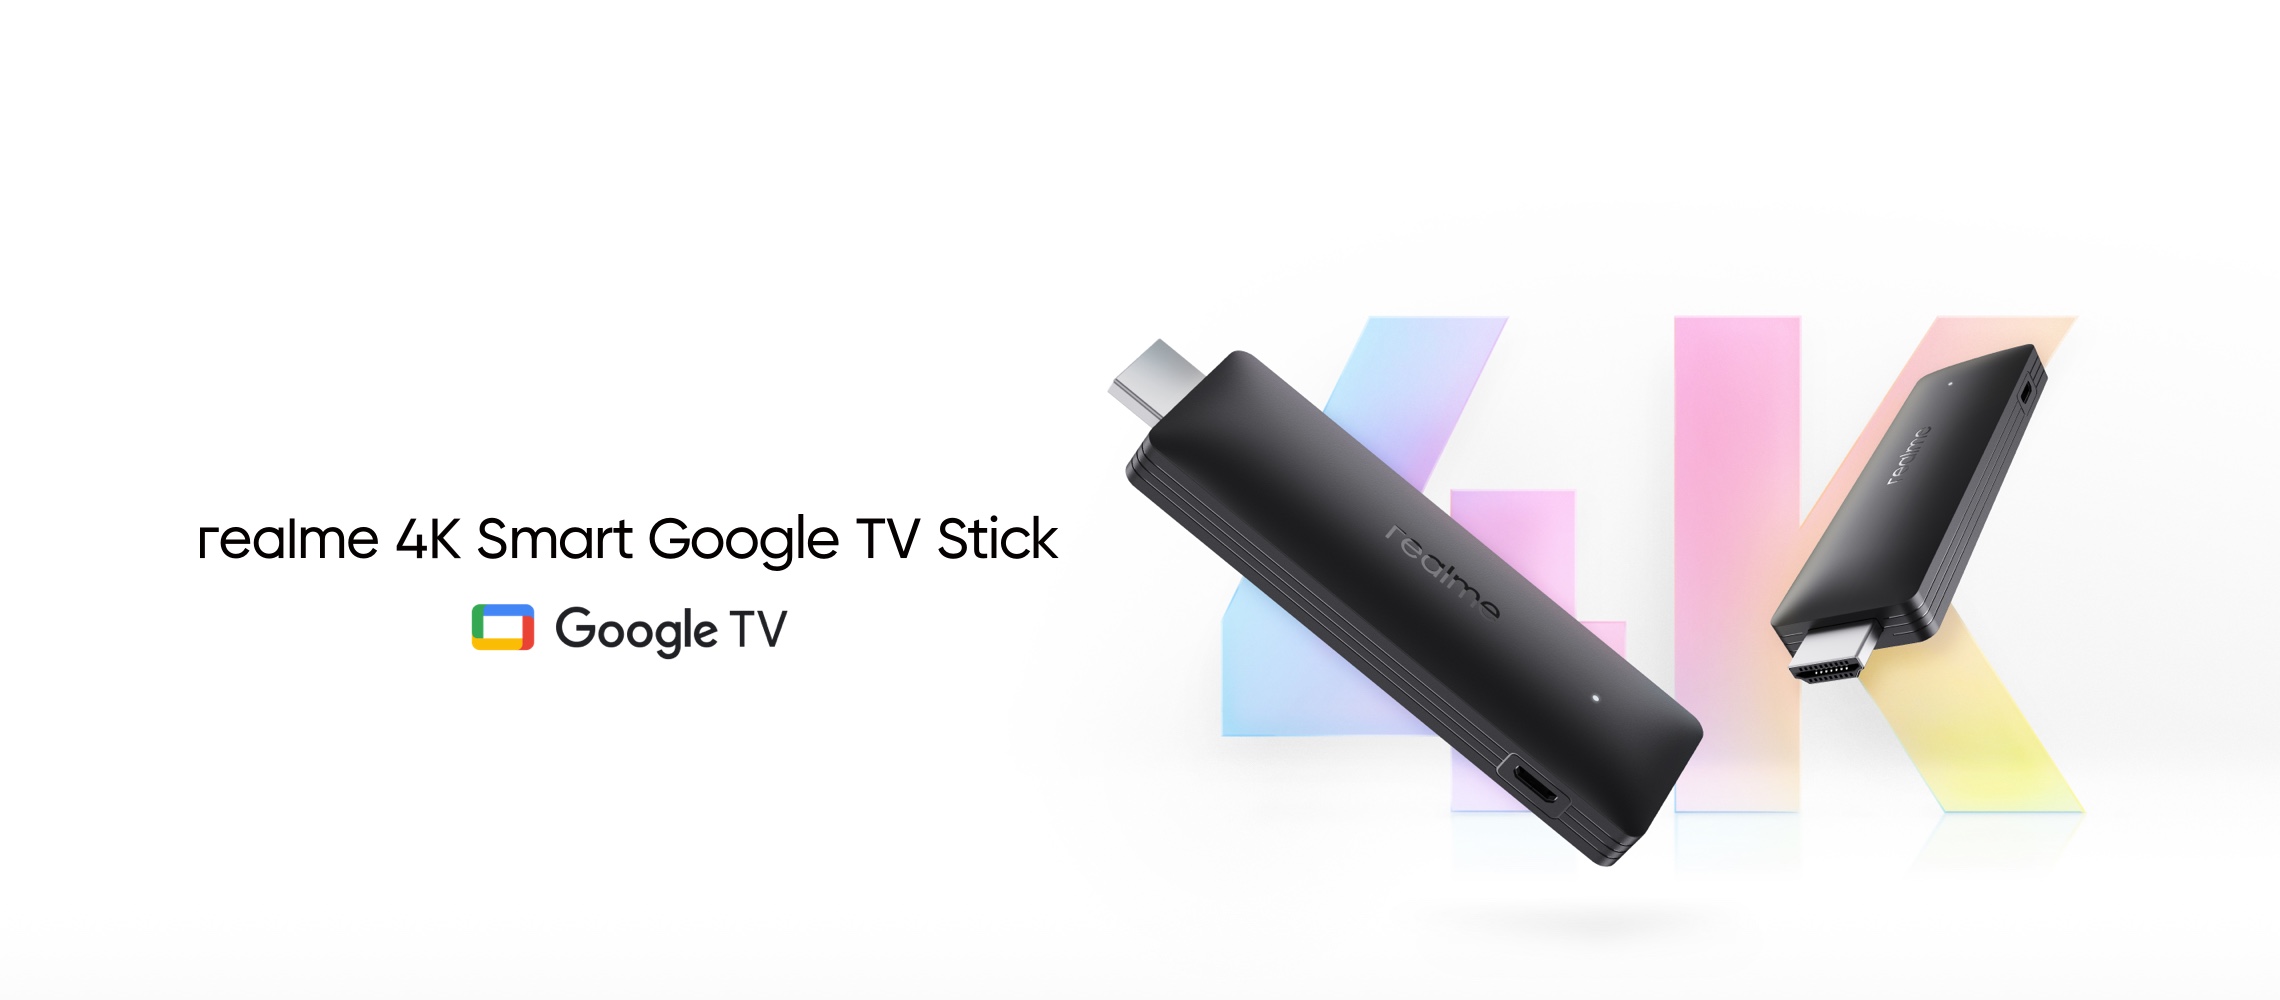 Realme 4K Smart Google TV Stick: Set-Top-Box im Stick-Stil mit 2 GB RAM, Quad-Core-Chip und Google TV an Bord für $53